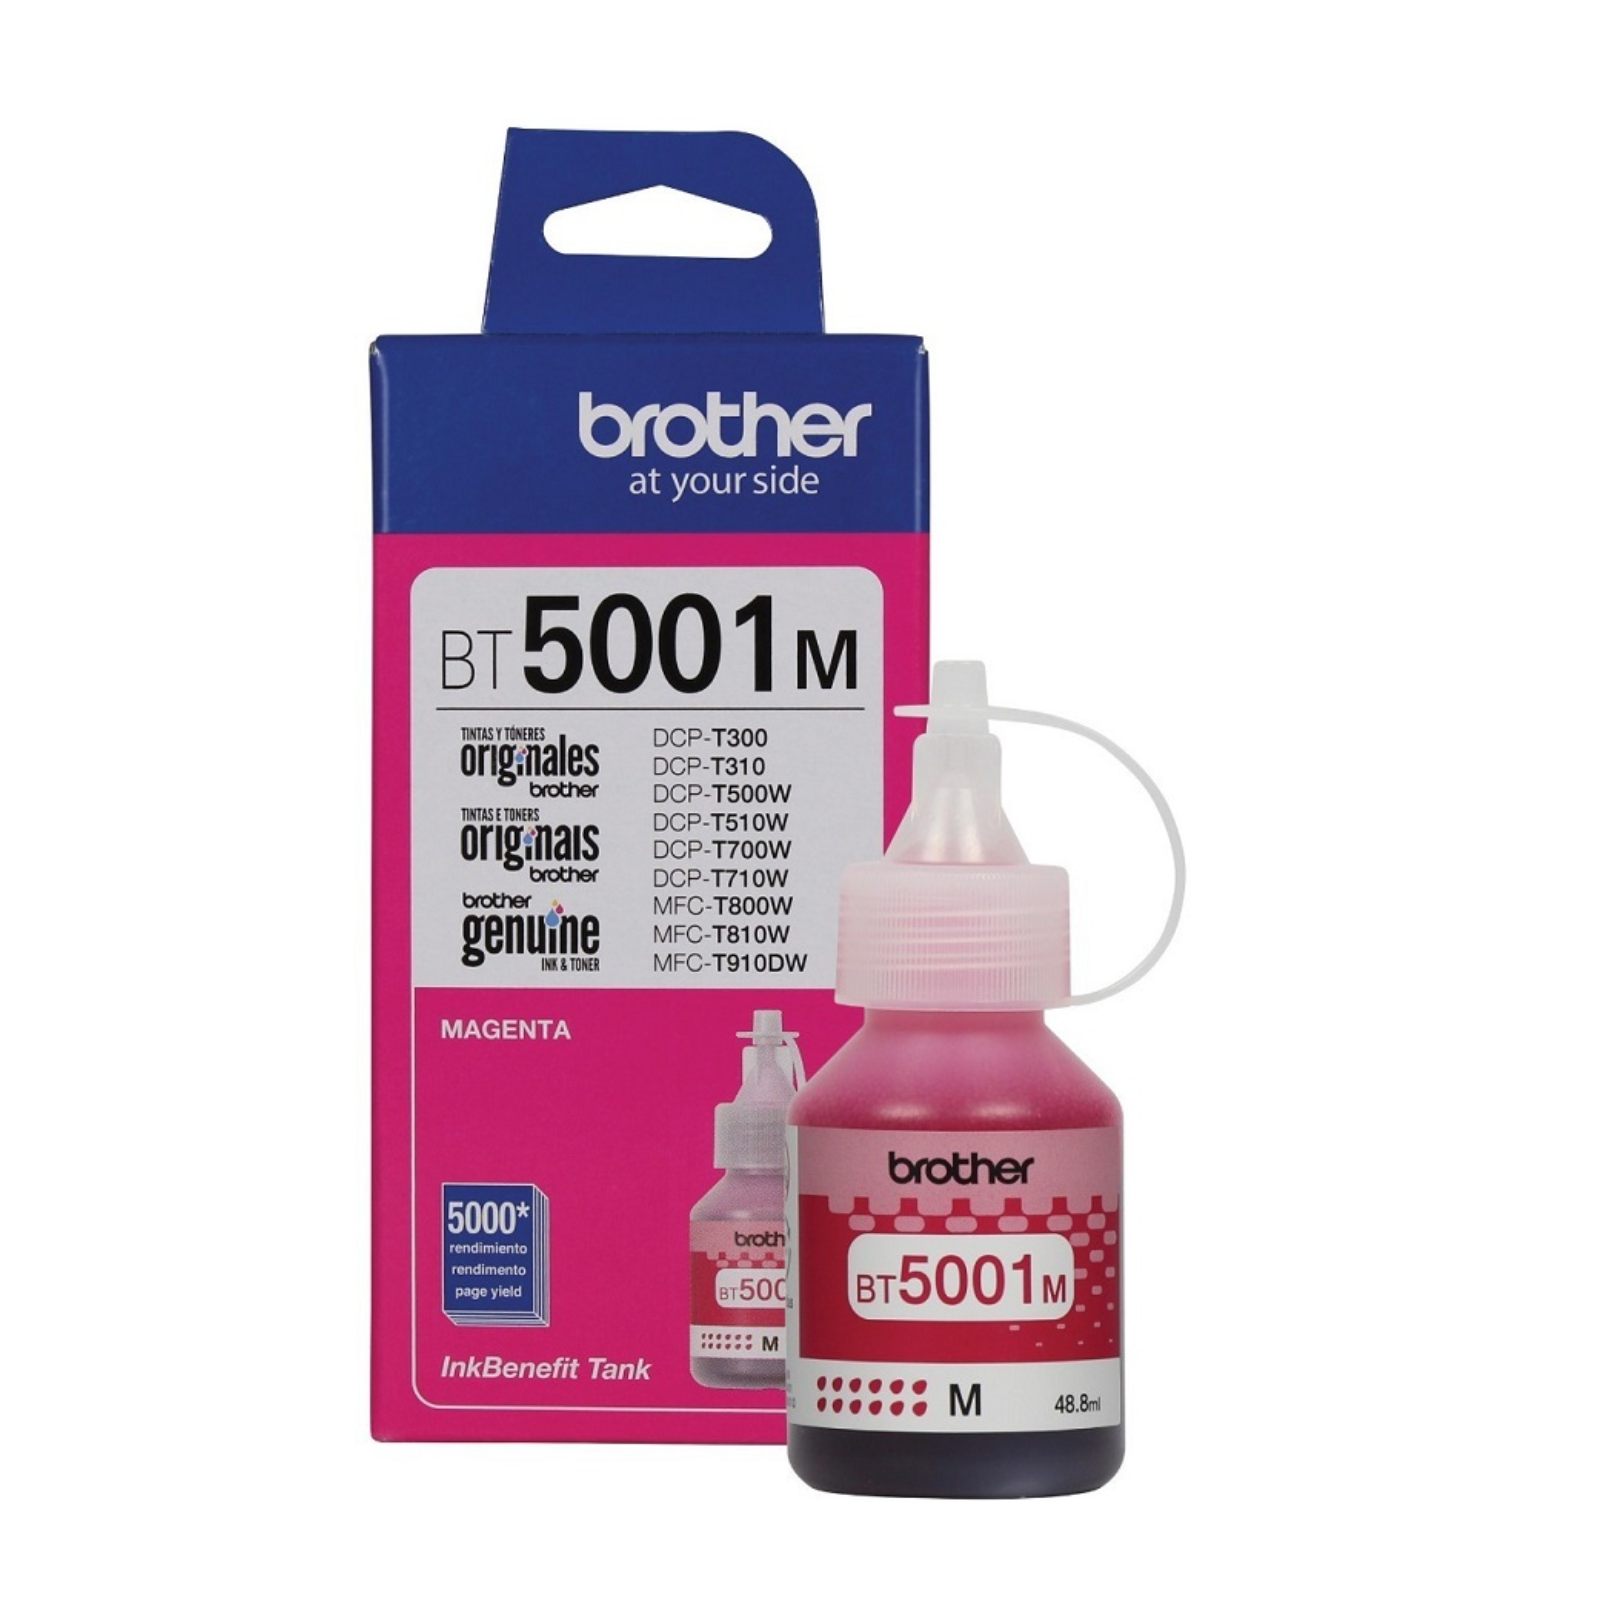 Botella de Tinta BROTHER BT5001M Magenta DCP-T300/T500W/T700W/T800W